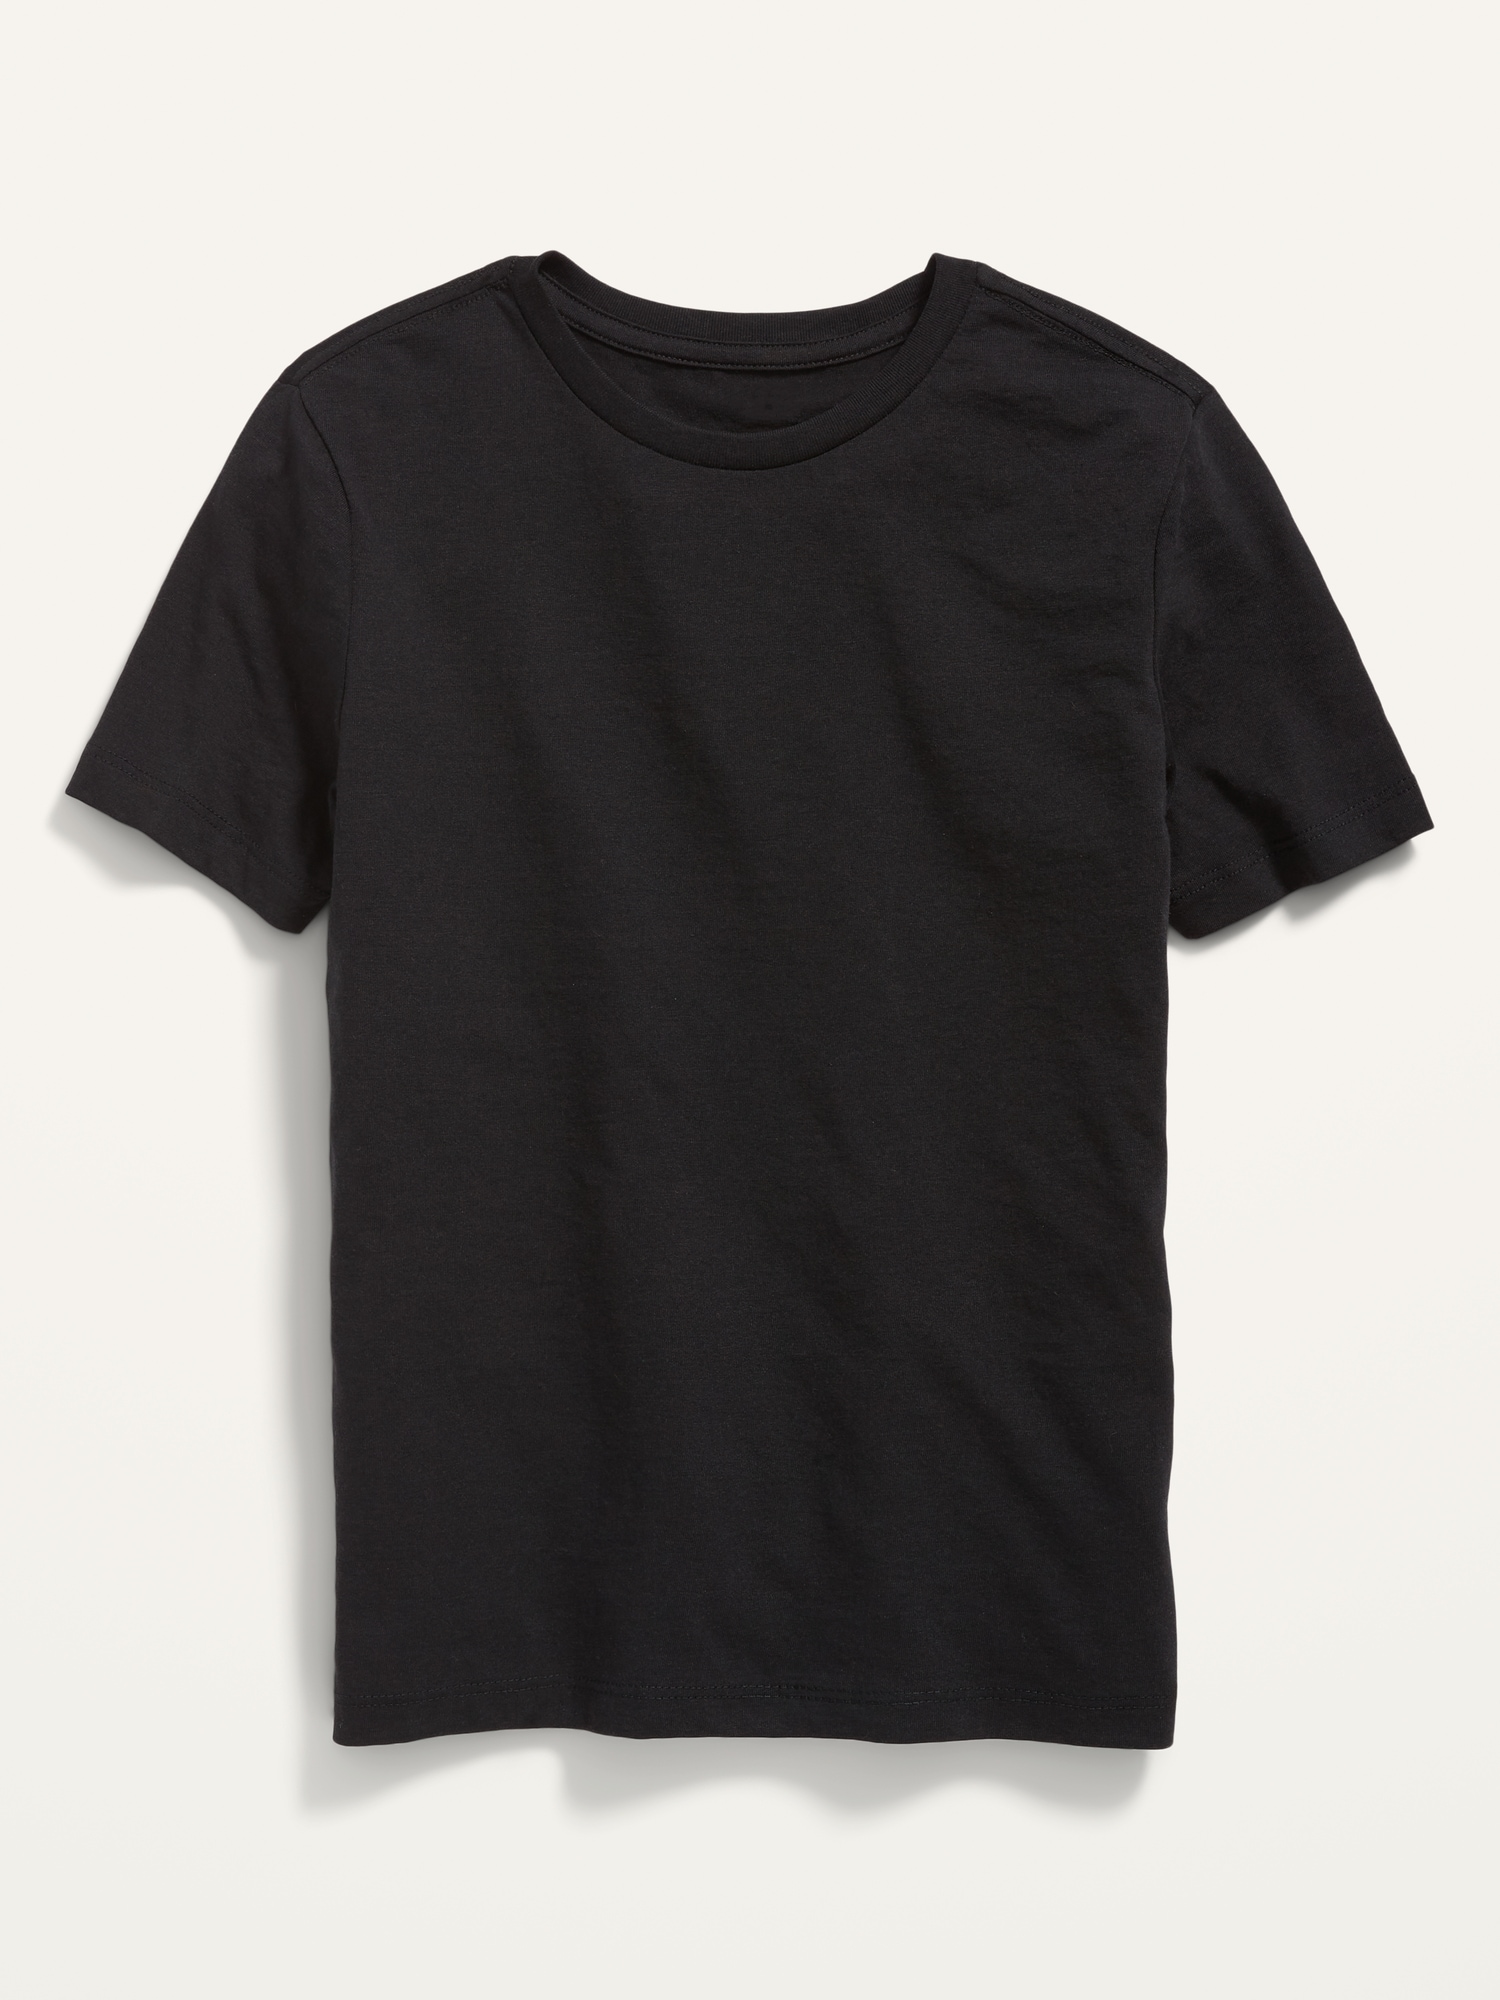 Old Navy Softest Crew-Neck T-Shirt for Boys black. 1